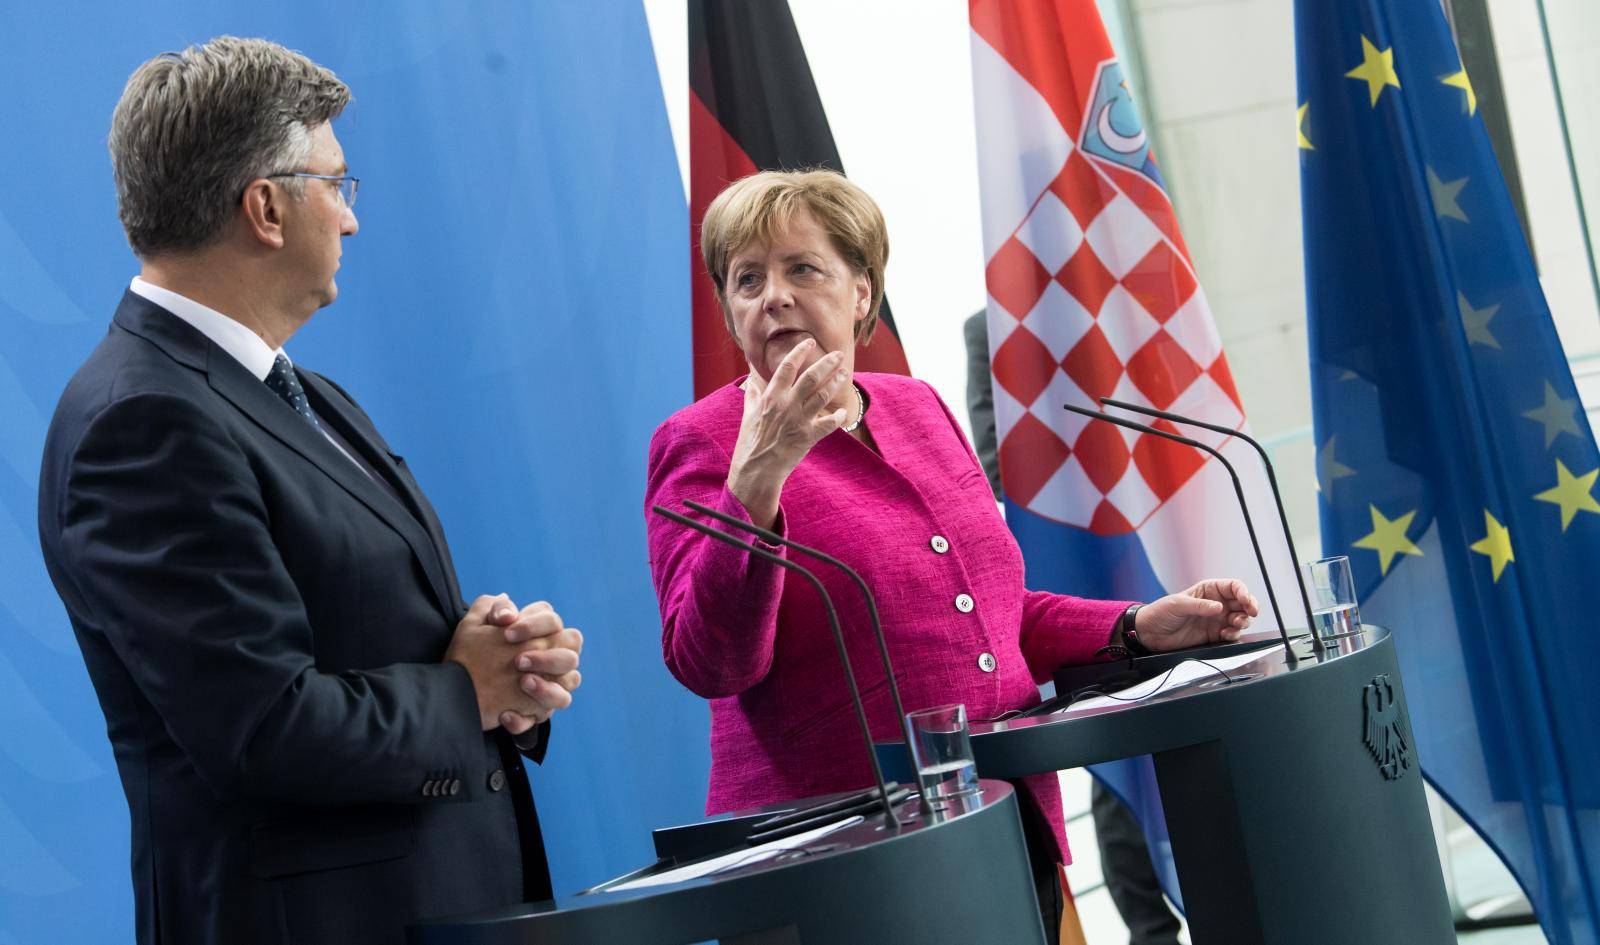 Croatian Prime Minister meets Merkel